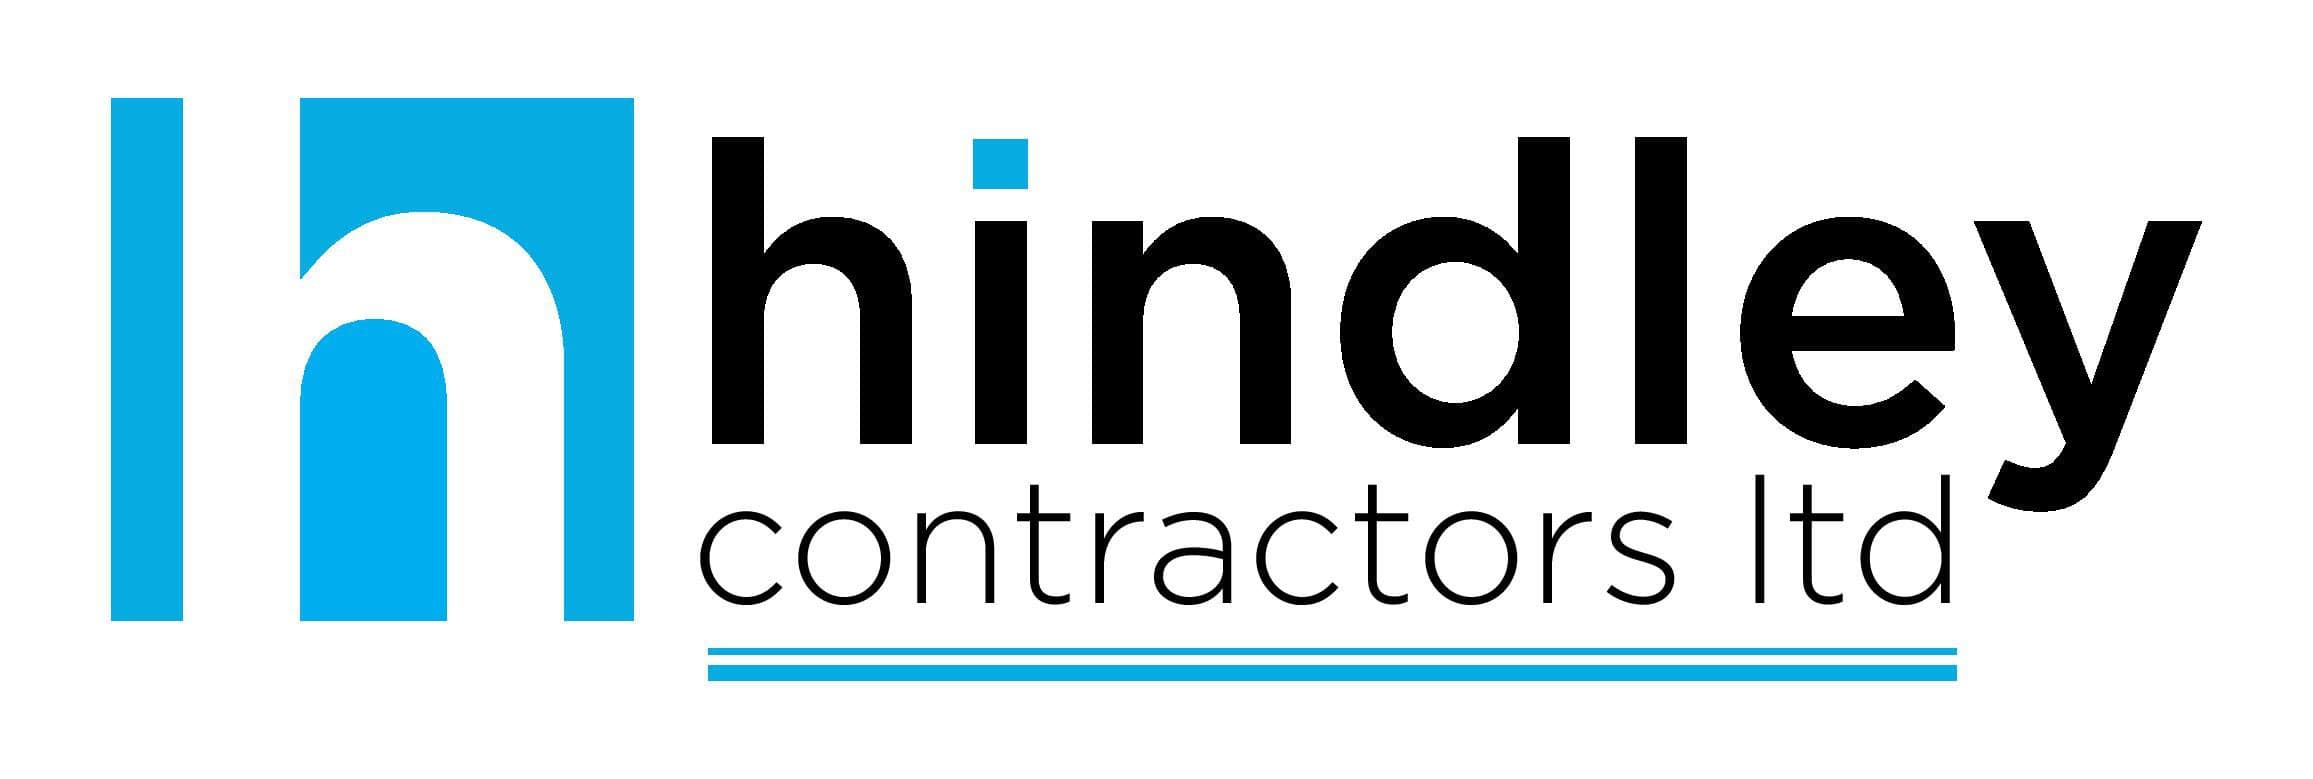 Hindley Contractors